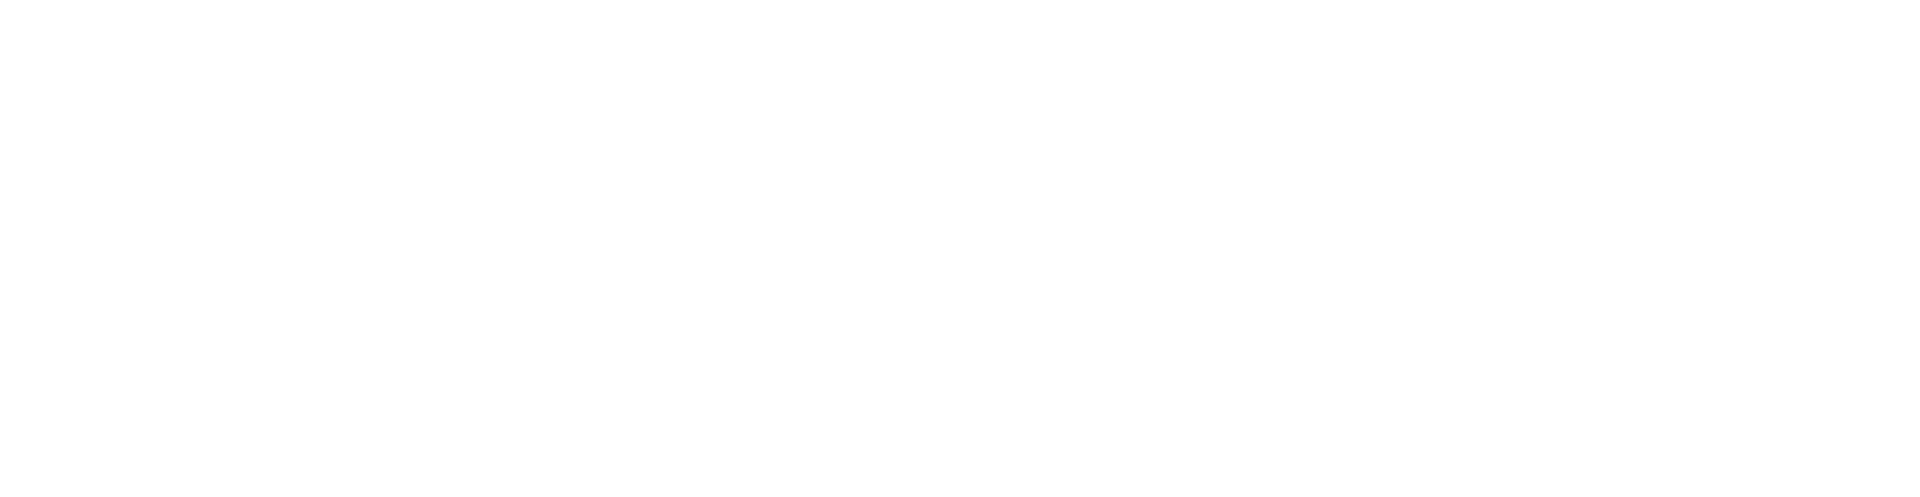 Neucin Logo Motion